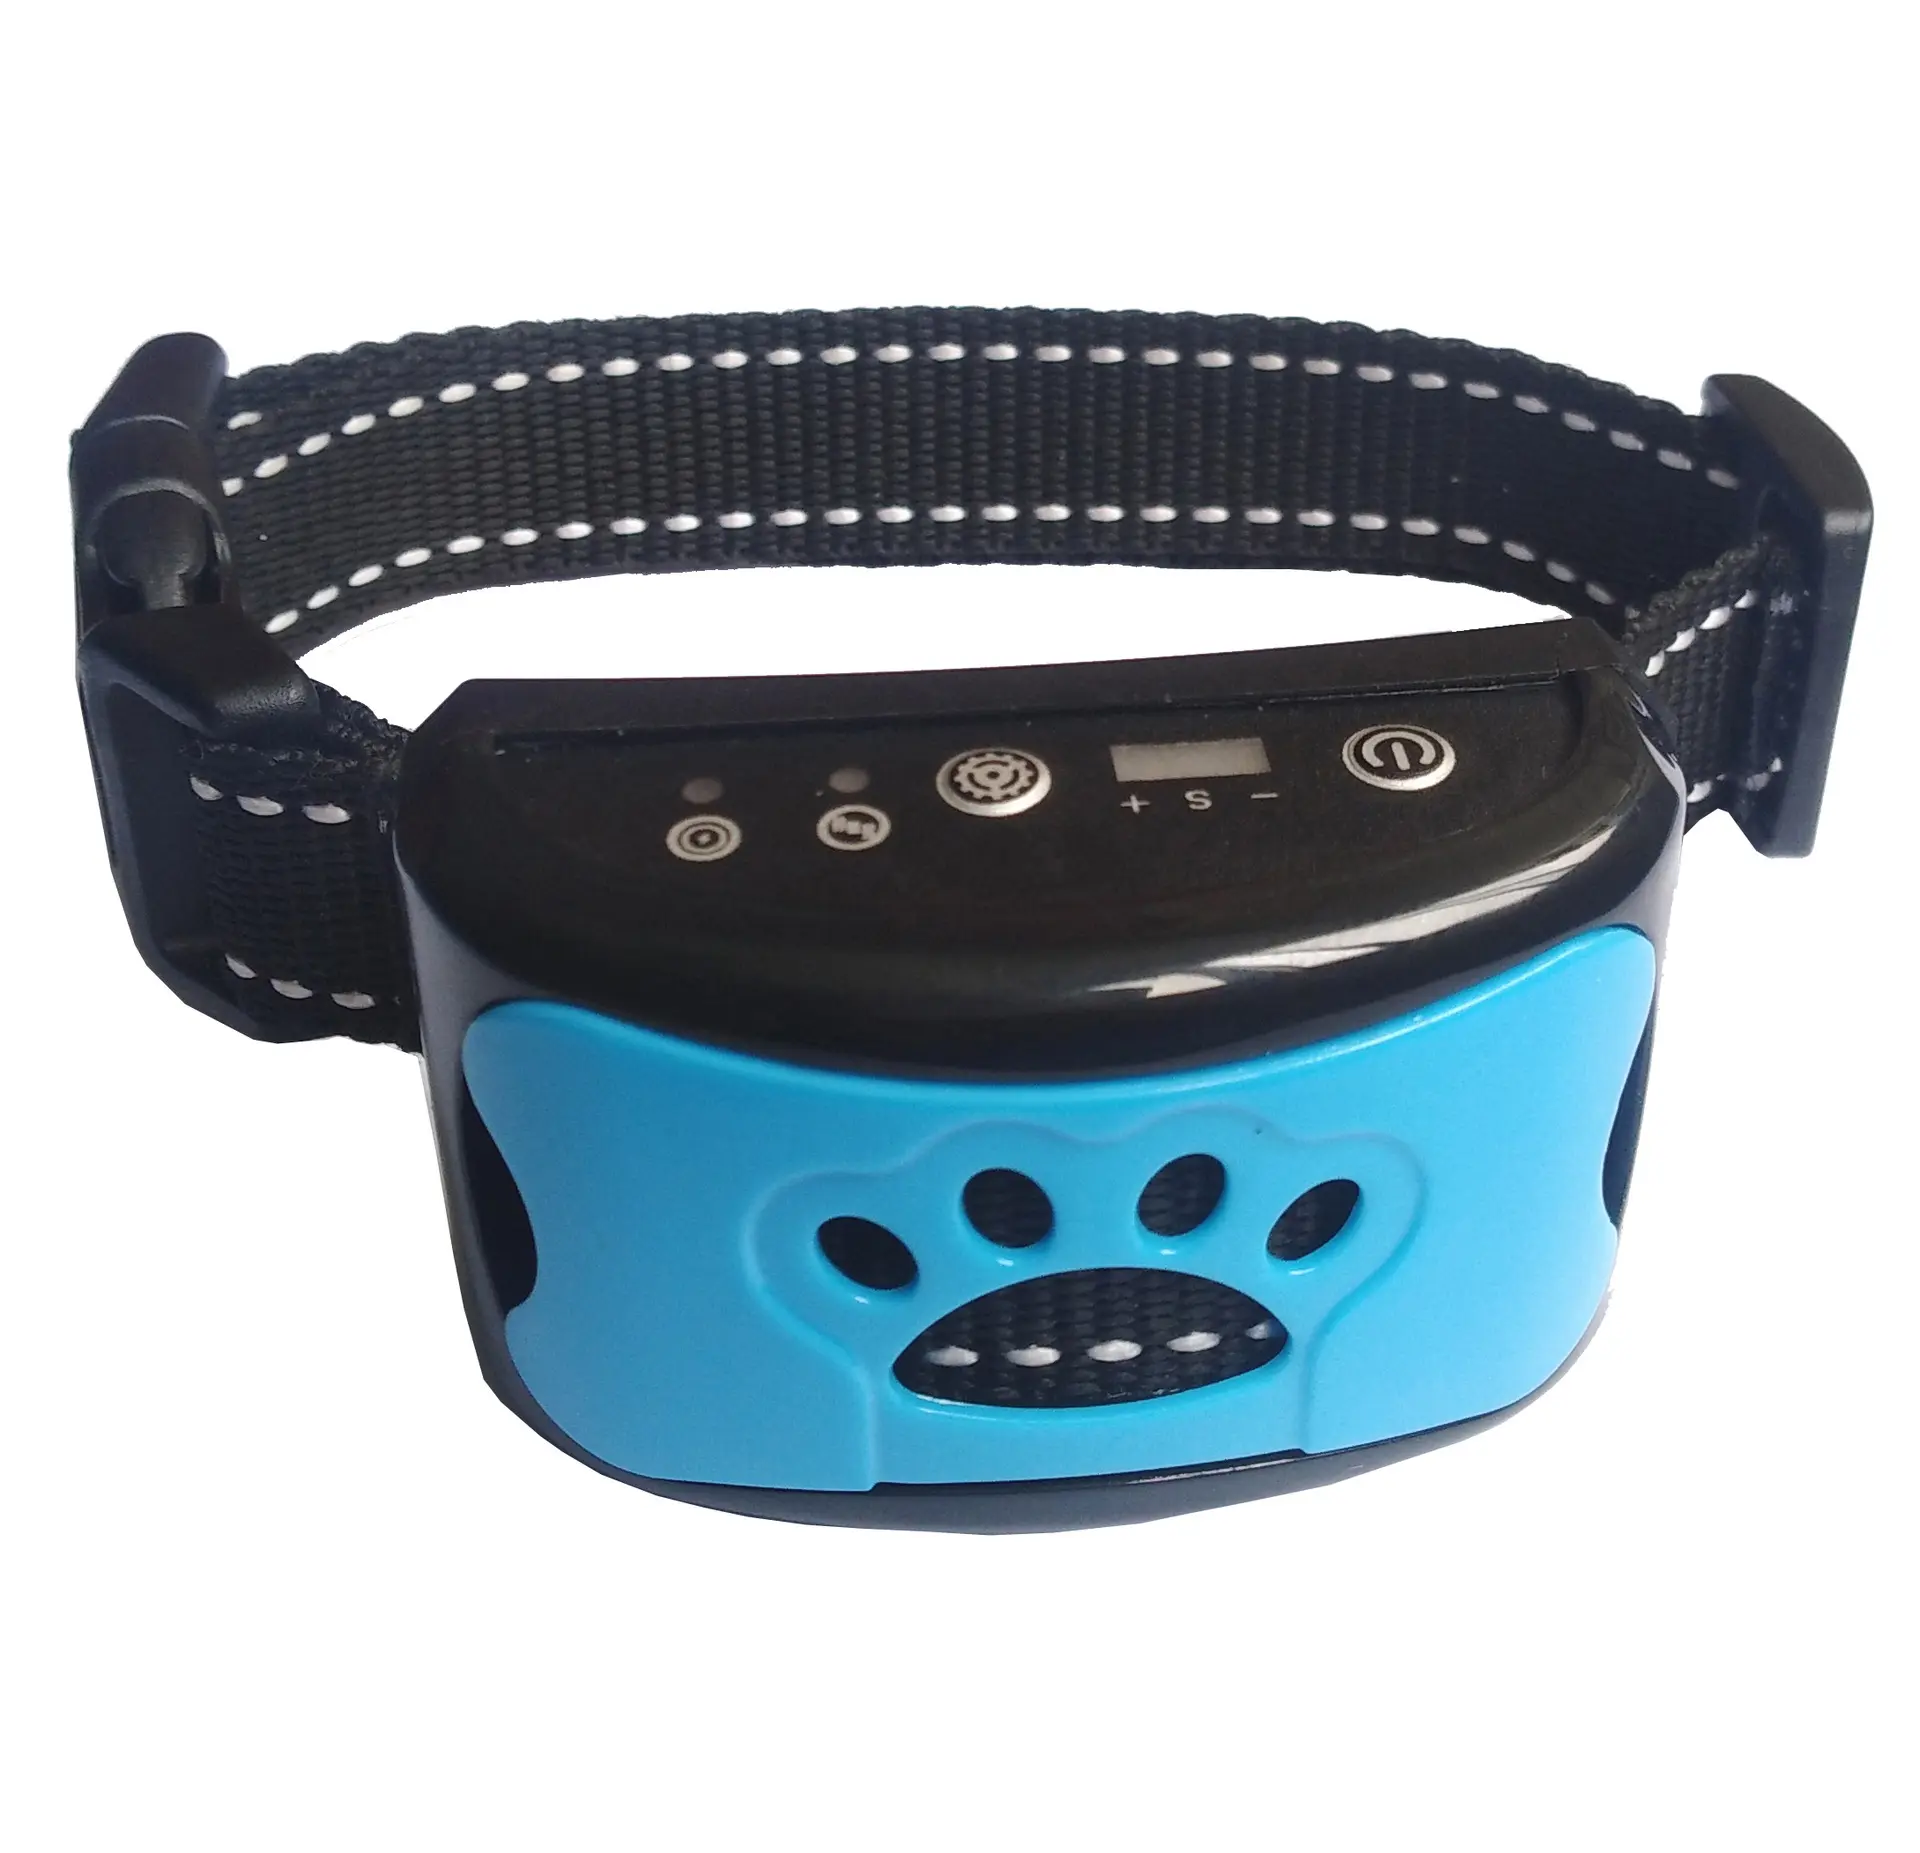 Amazon Top Seller No Bark Electric Shock Vibration Bark Control Collar for Dog Voice Activated Anti Bark Pet Dog Training Collar